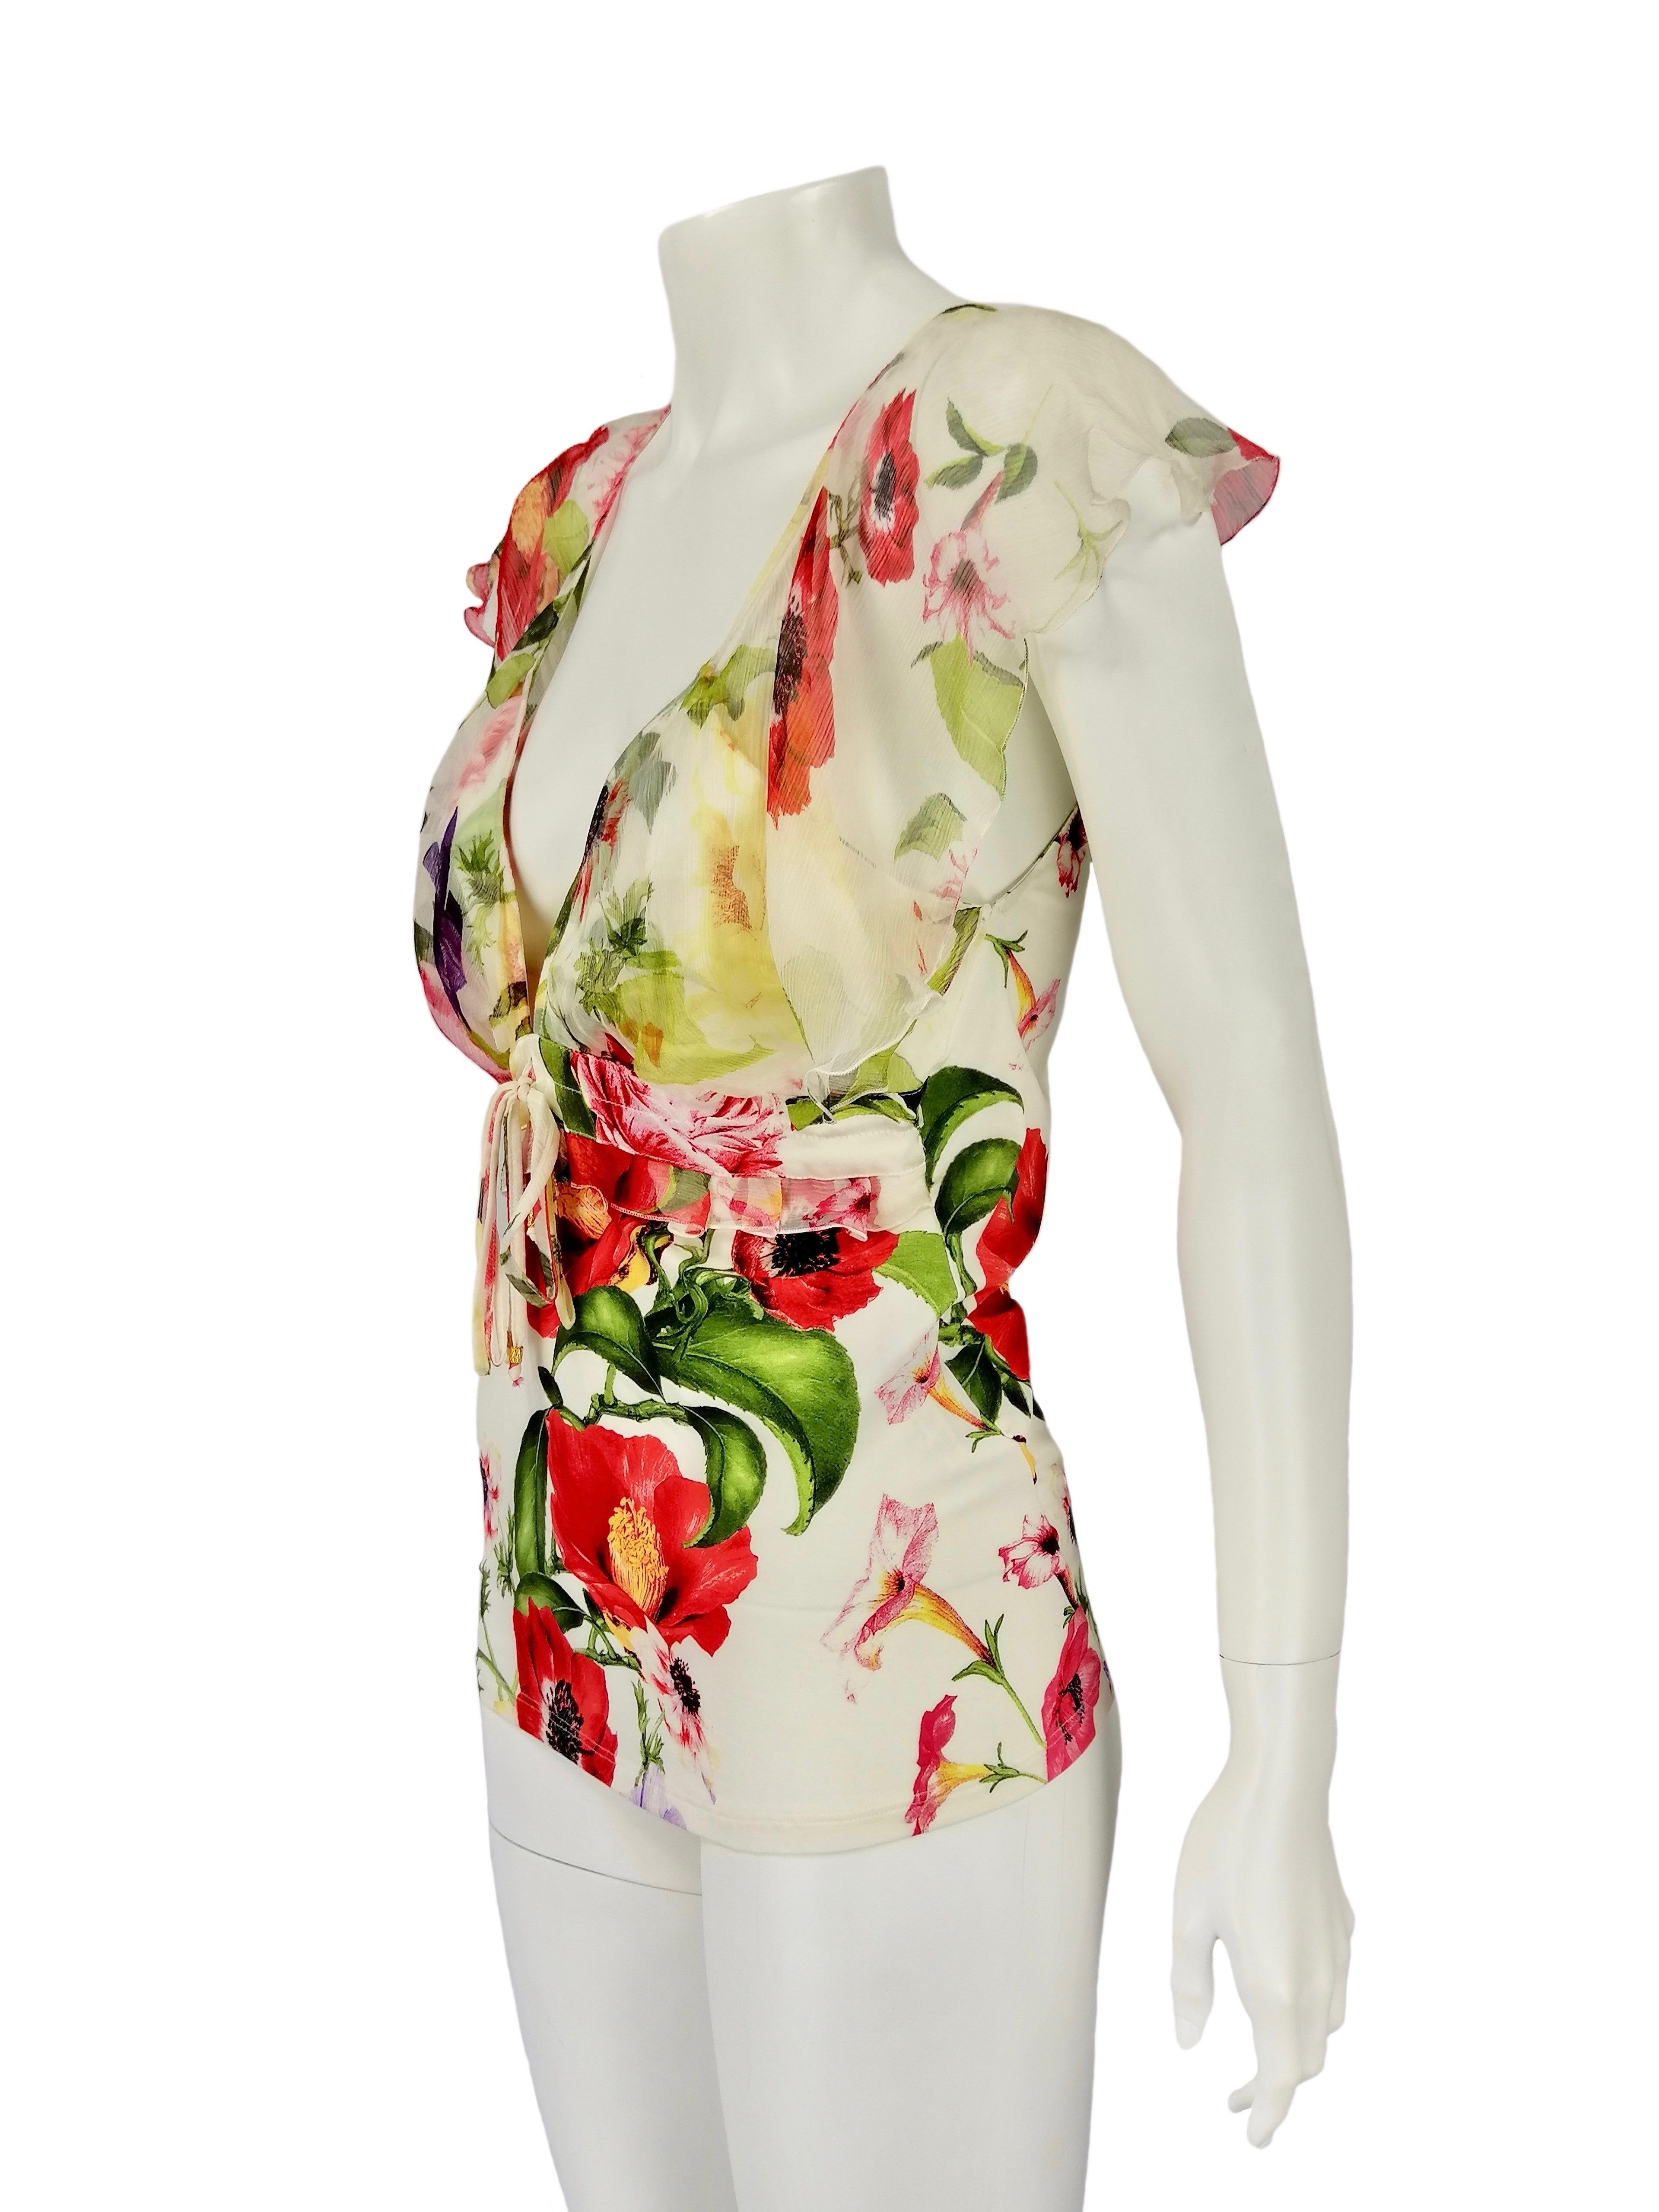 ROBERTO CAVALLI floral shirt For Sale 1